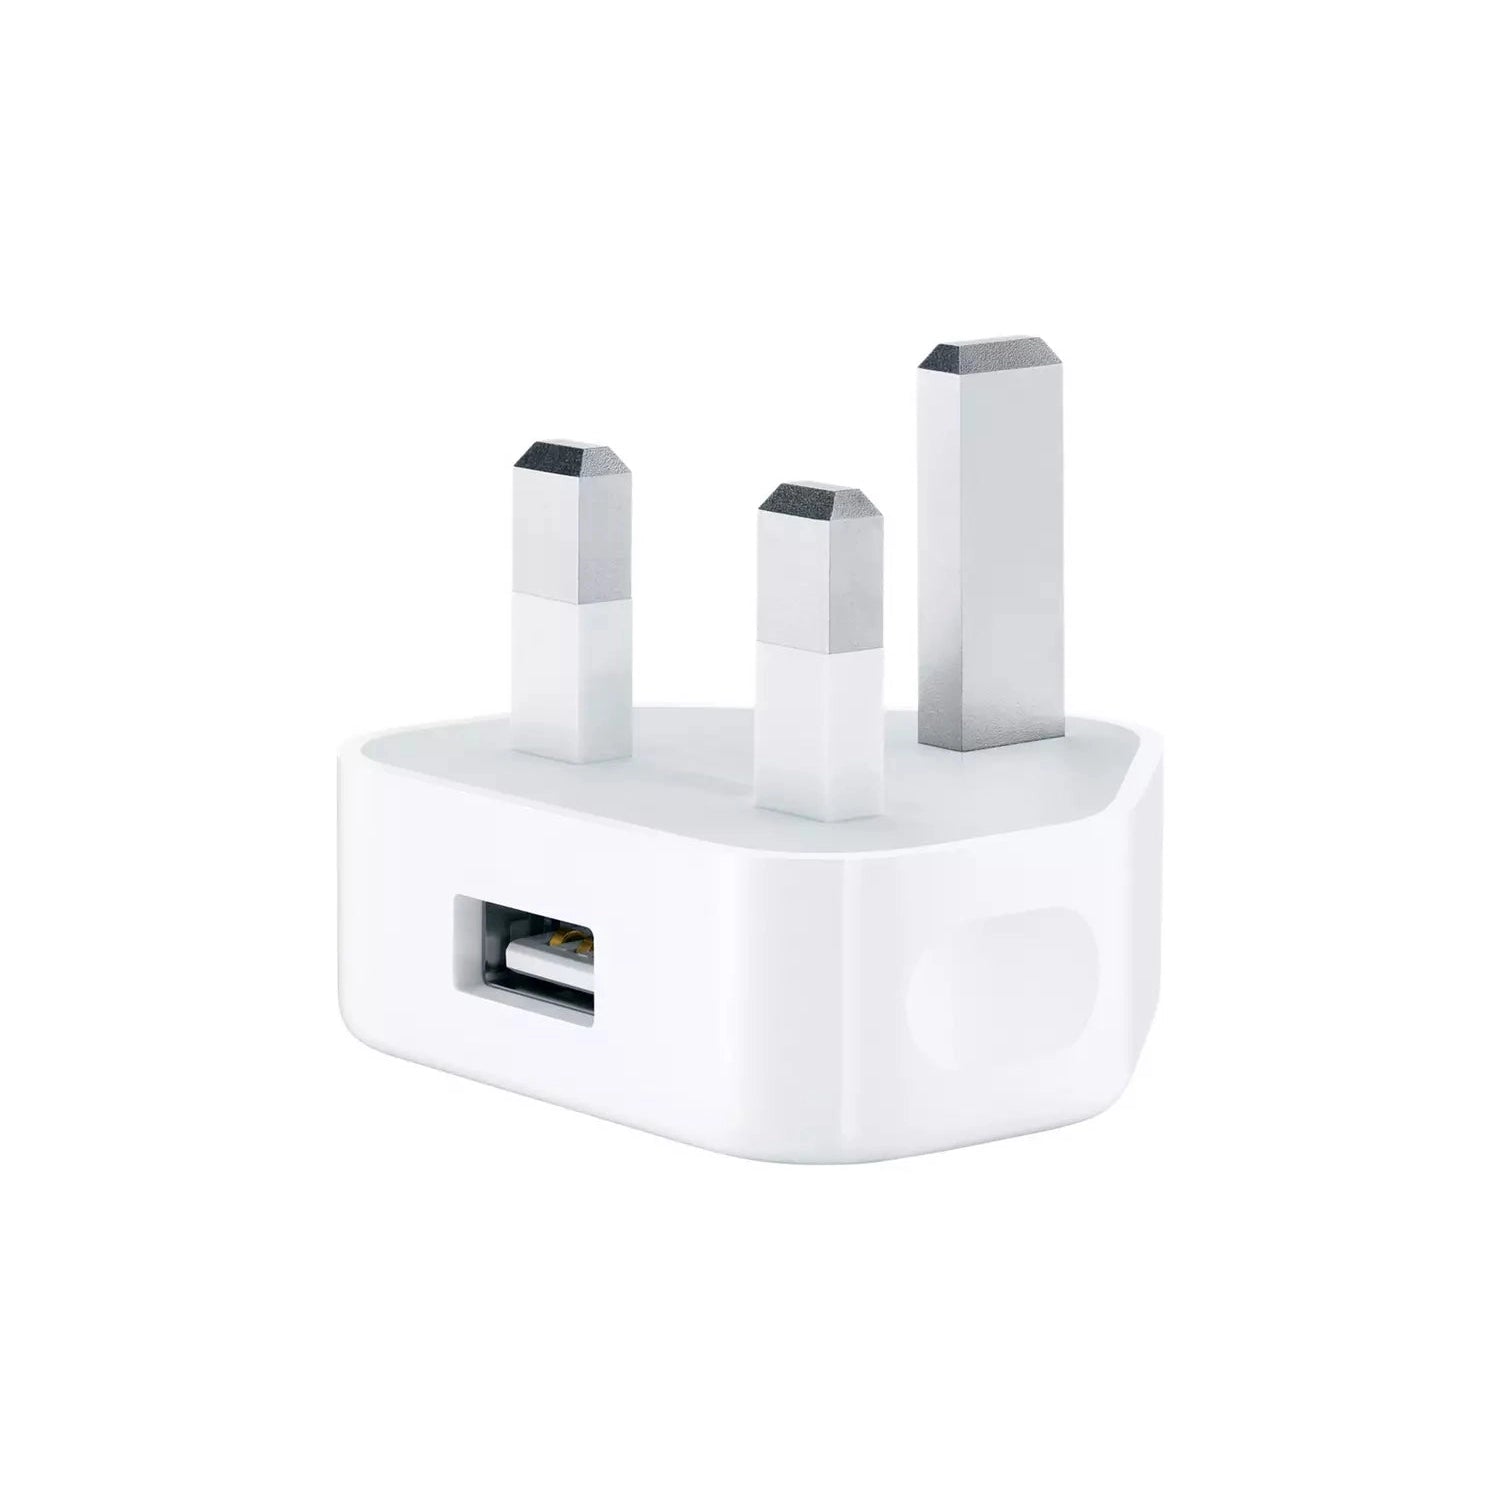 Apple 5W USB Power Adapter - MD812B/C - New